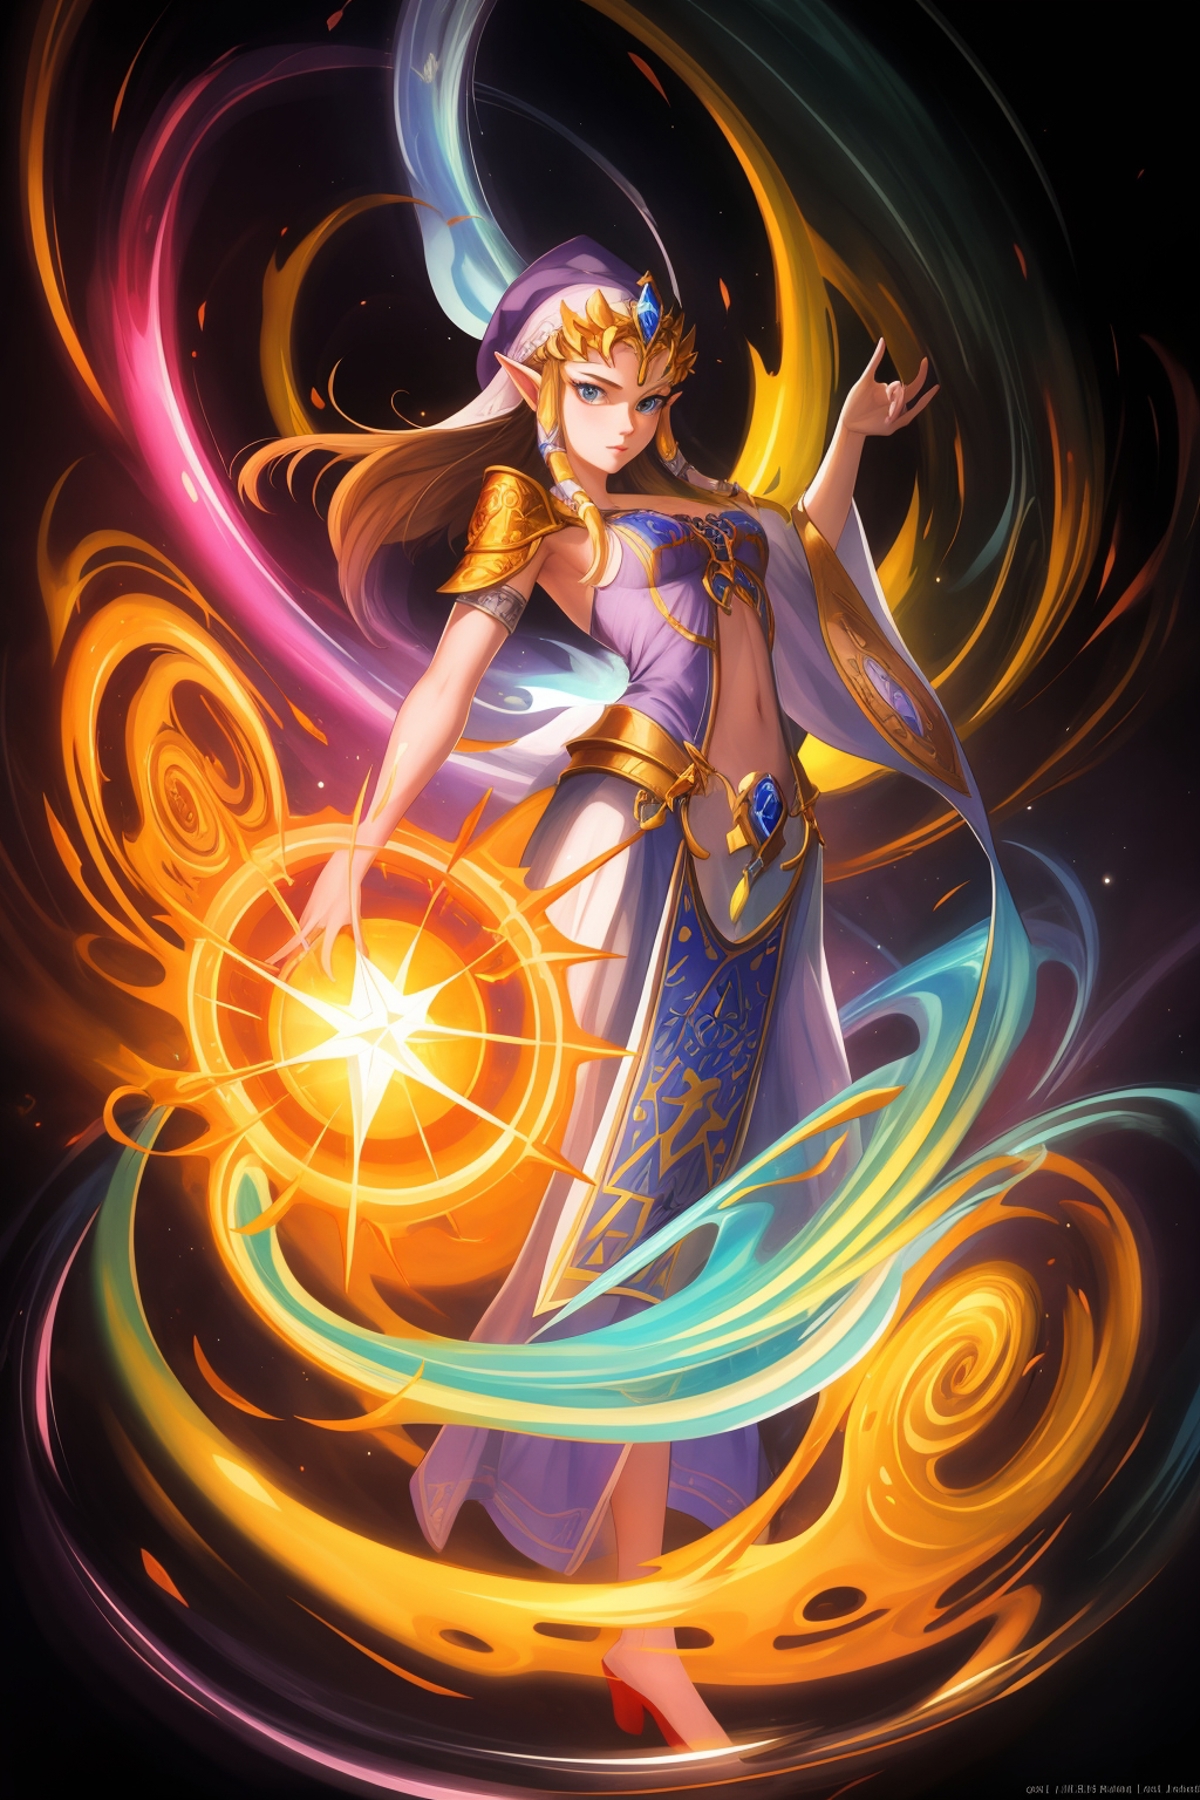 Zelda (Twilight Princess) image by SmartNeto